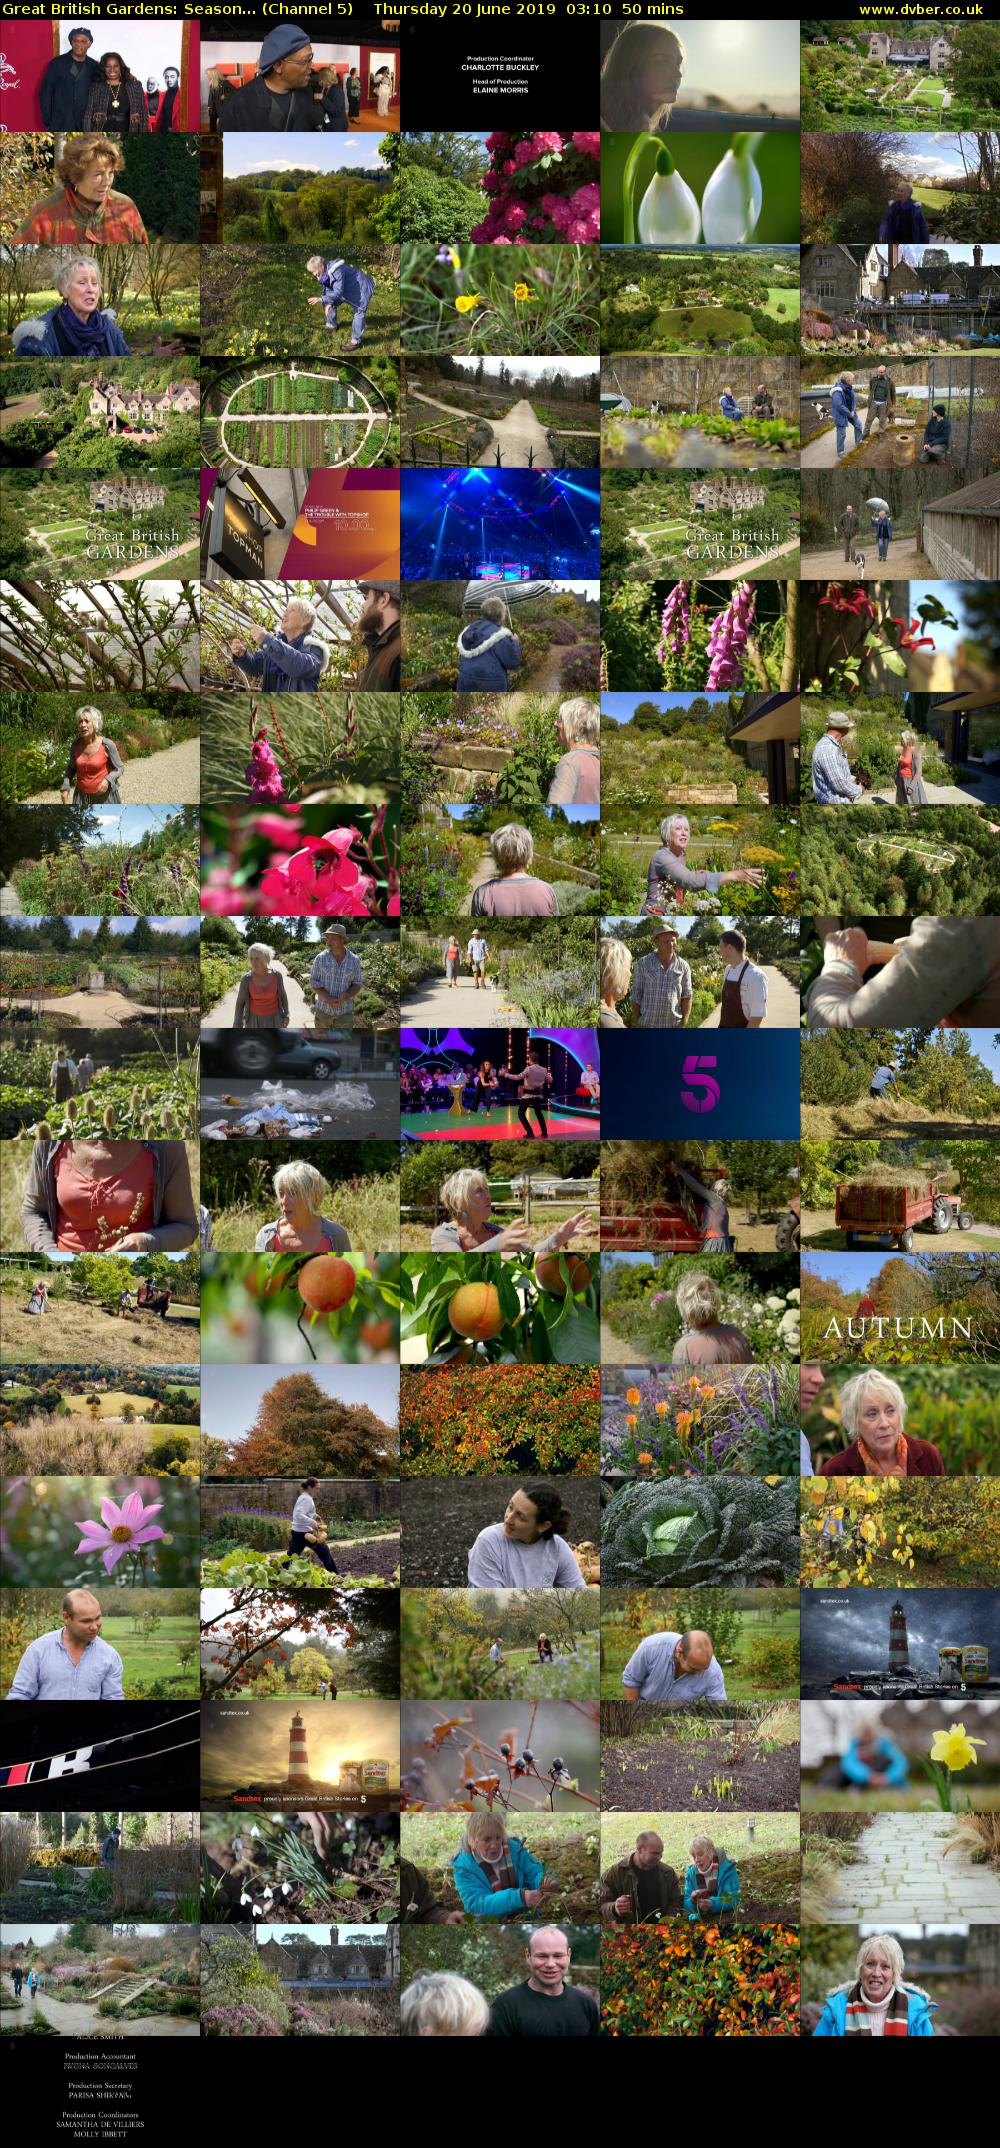 Great British Gardens: Season... (Channel 5) Thursday 20 June 2019 03:10 - 04:00